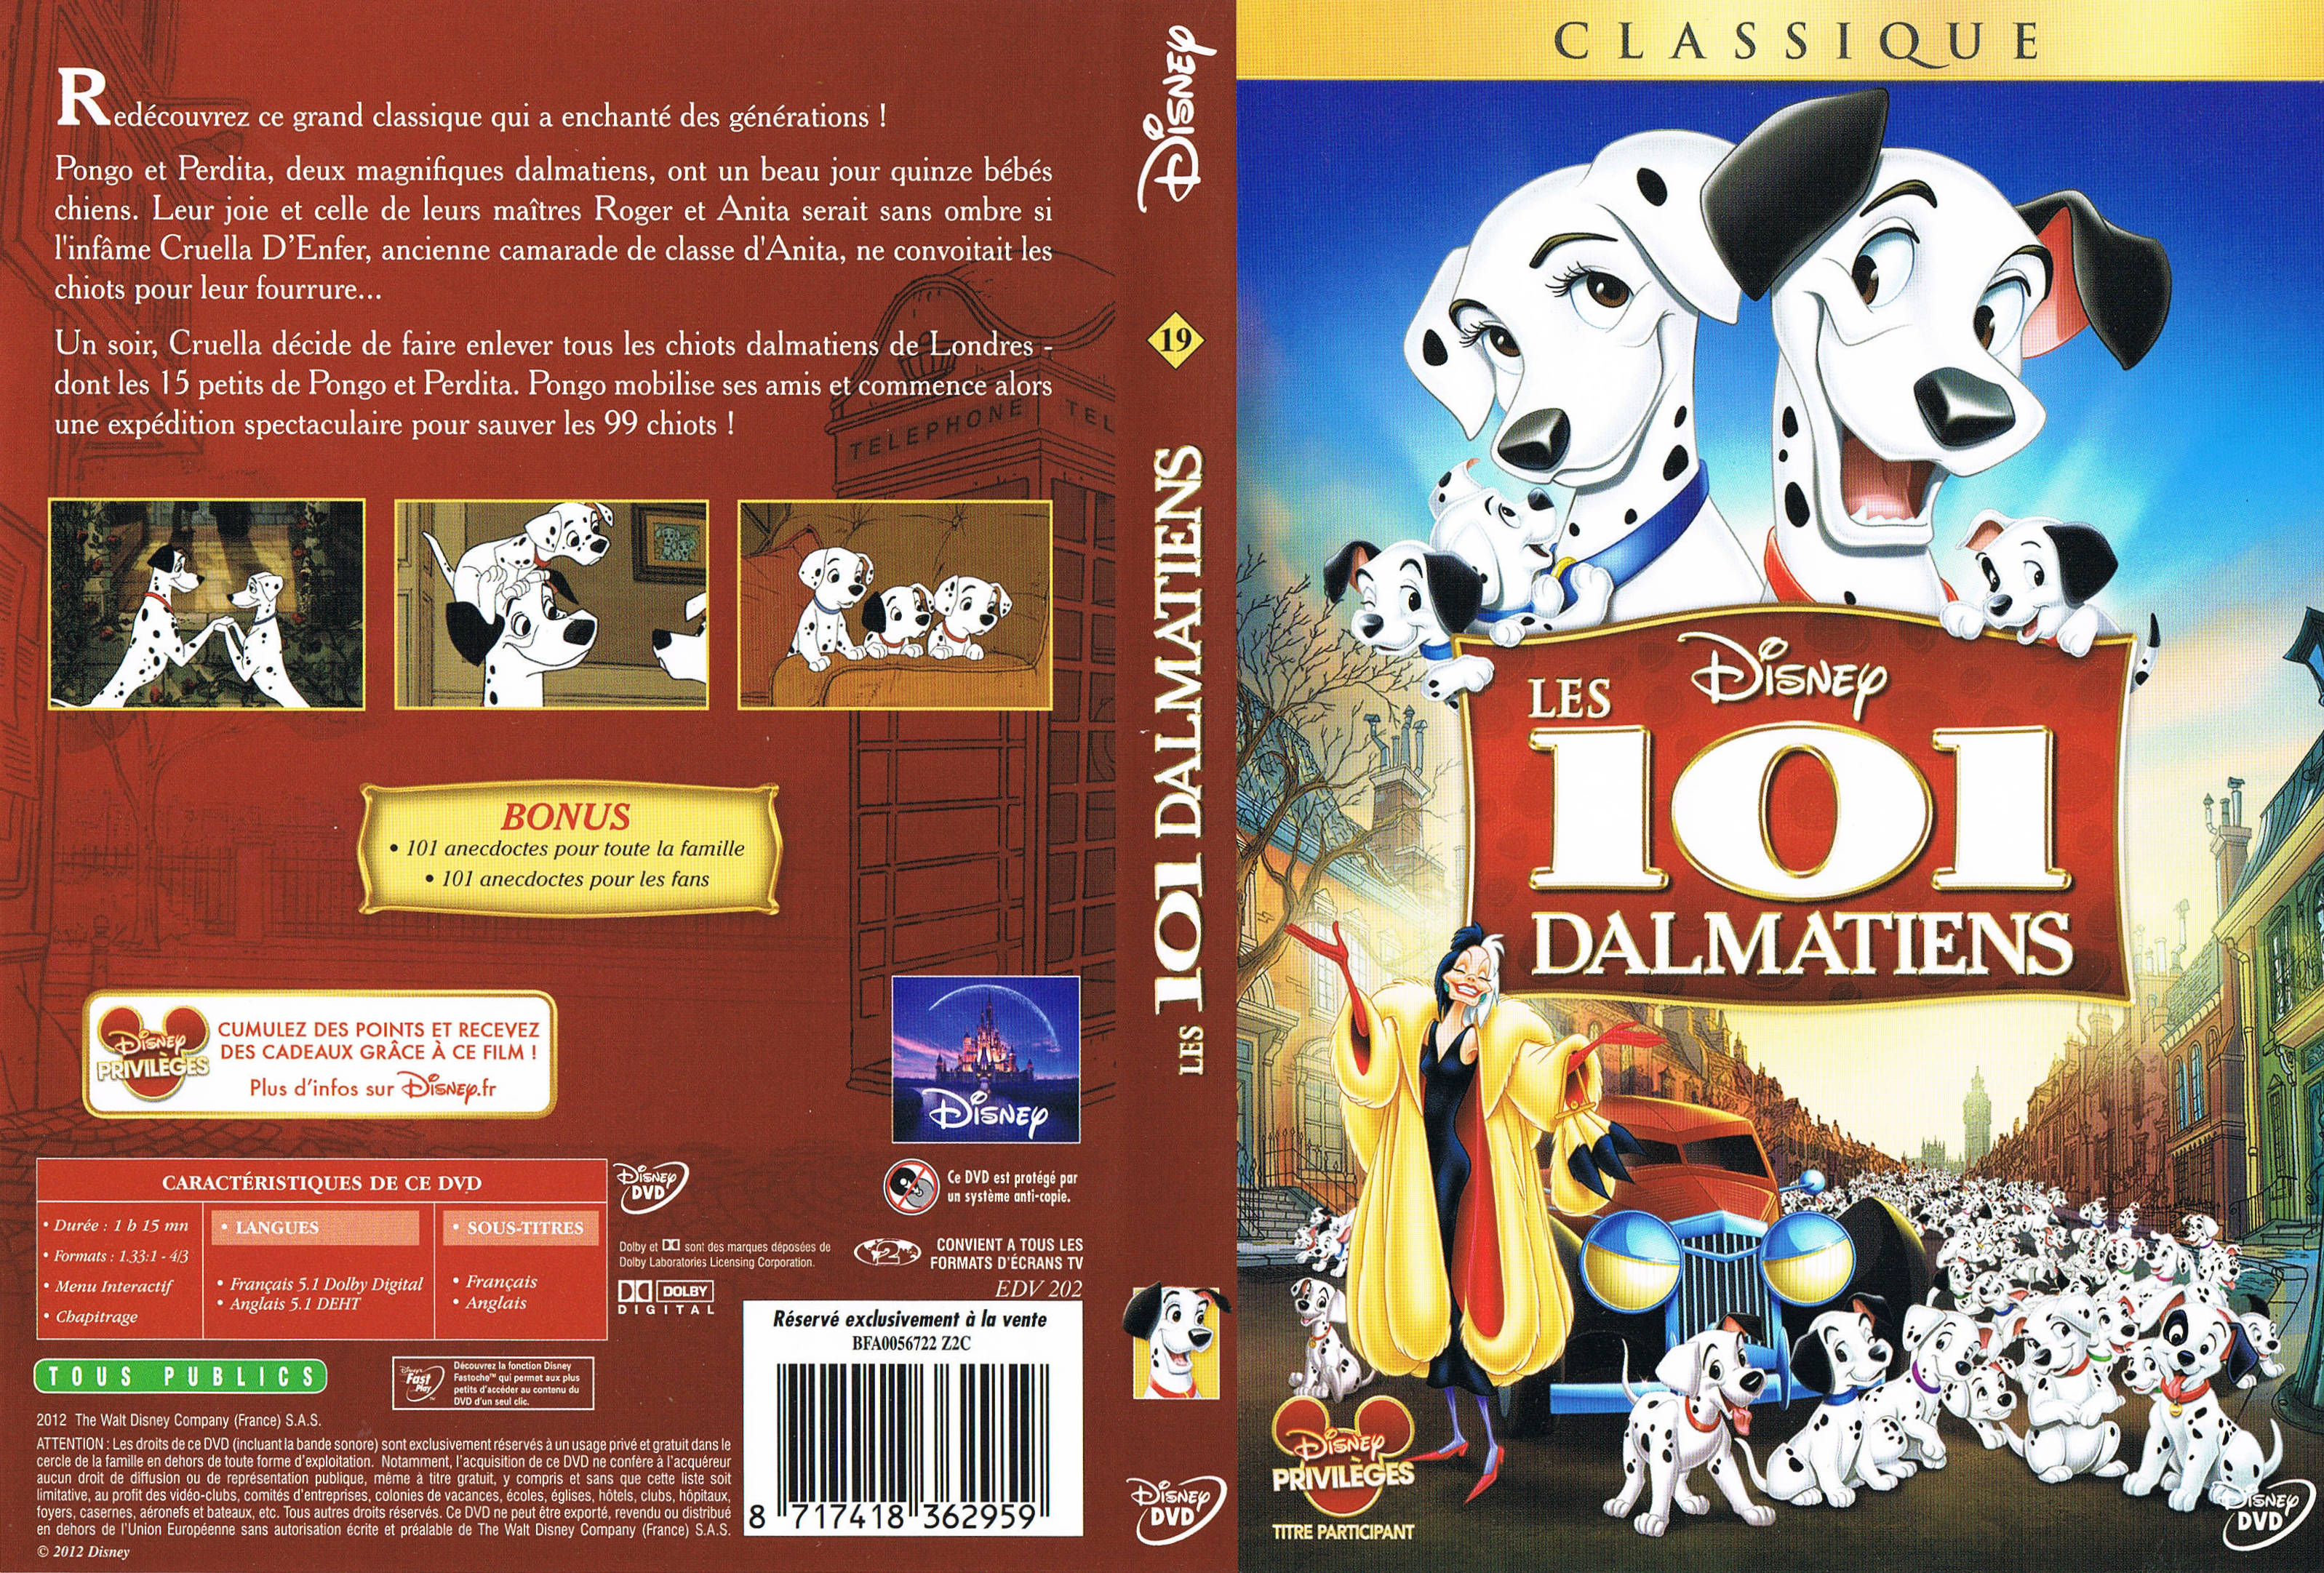 Jaquette DVD Les 101 dalmatiens v5